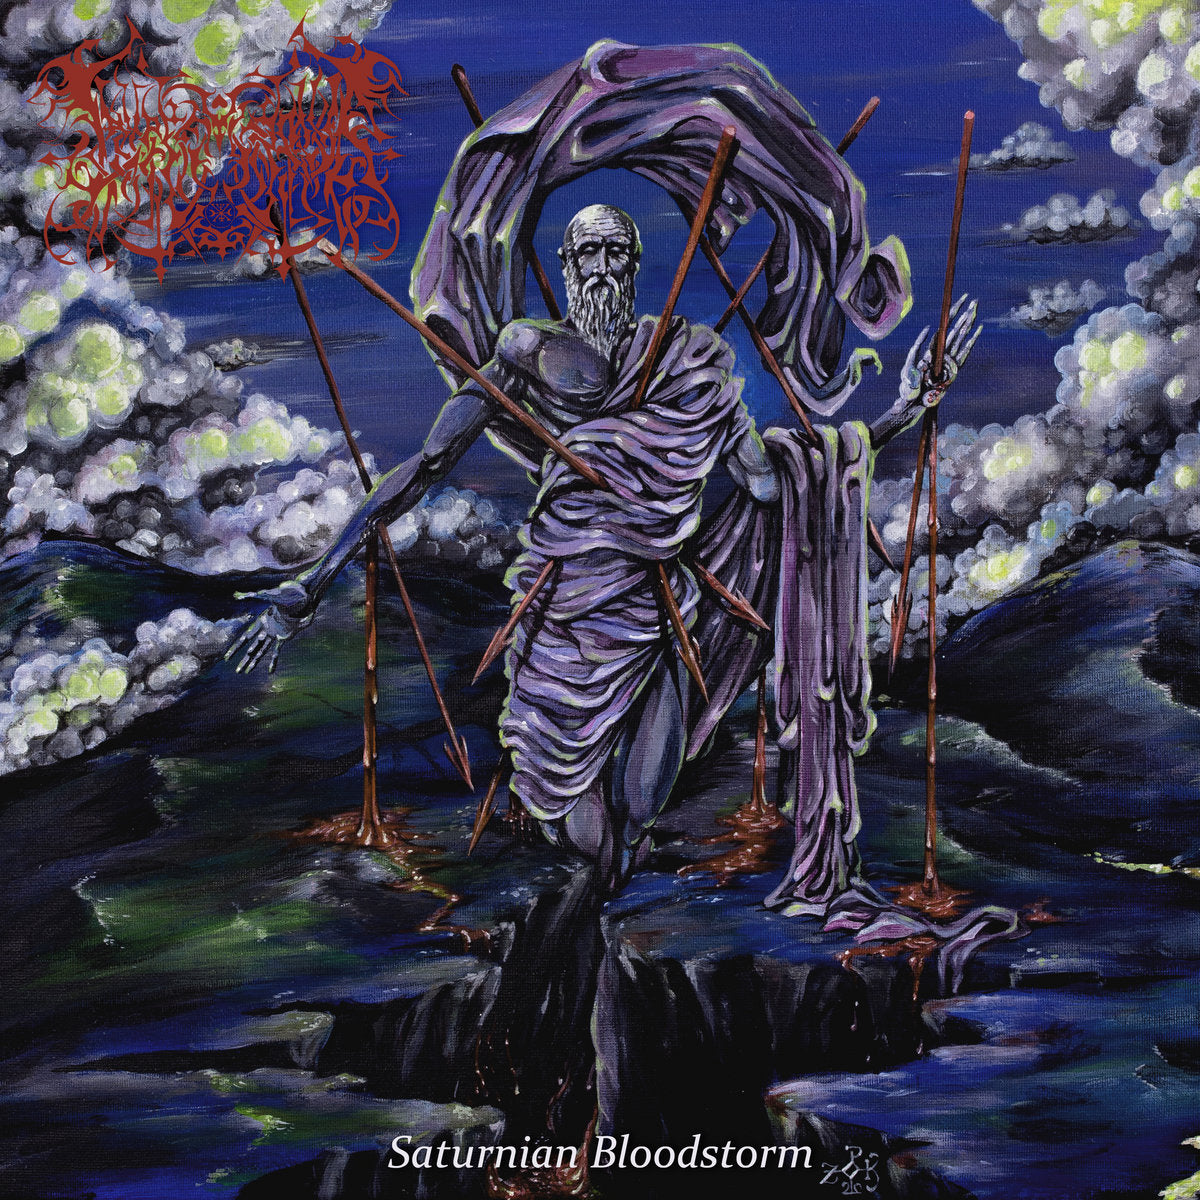 LAMP OF MURMUUR "Saturnian Bloodstorm" CD